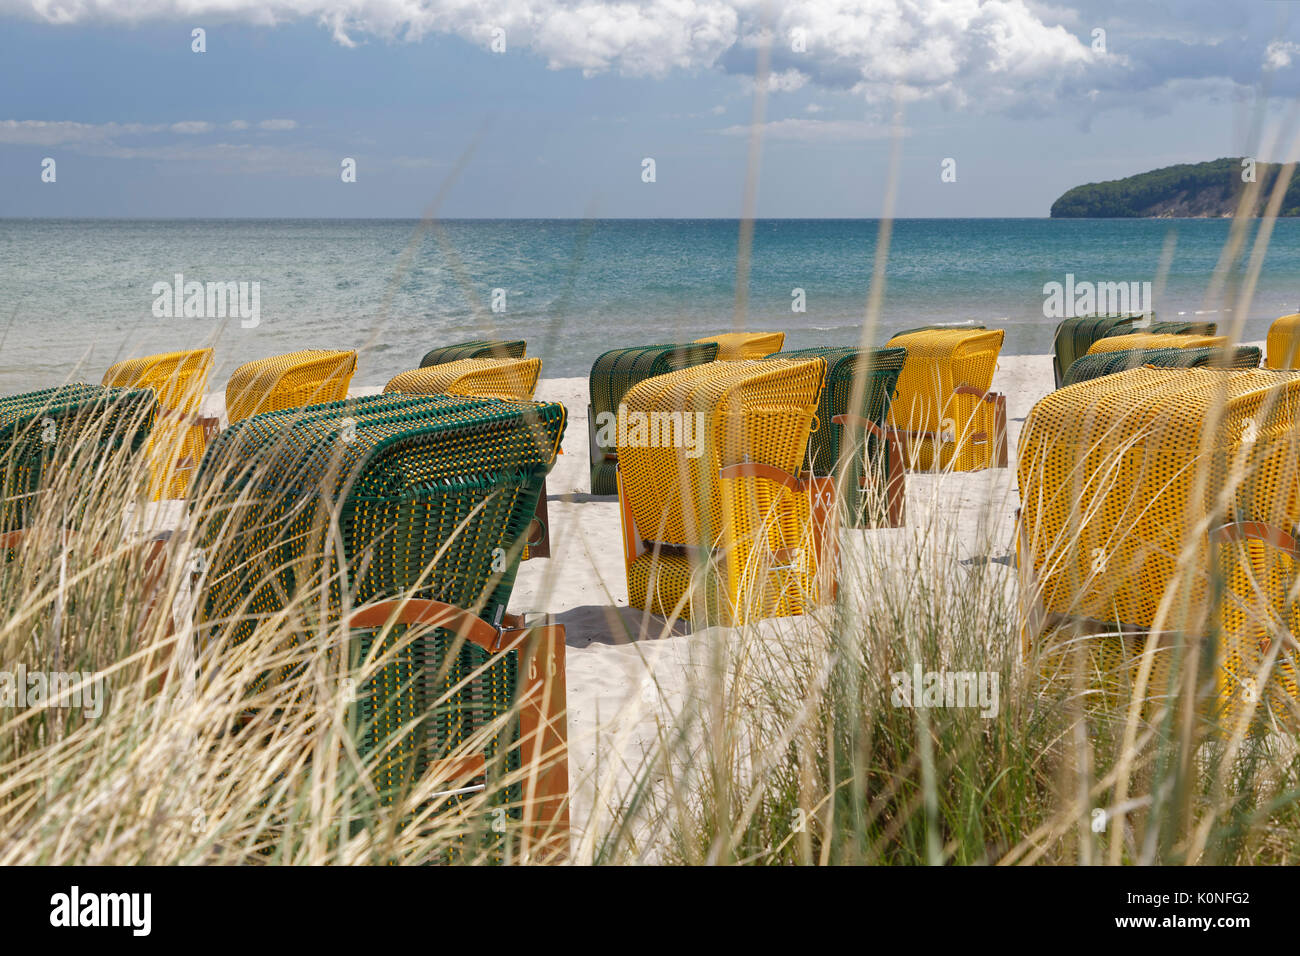 Germany, Mecklenburg-Western Pomerania, Baltic sea seaside resort Binz, Hooded beach chairs on the beach Stock Photo